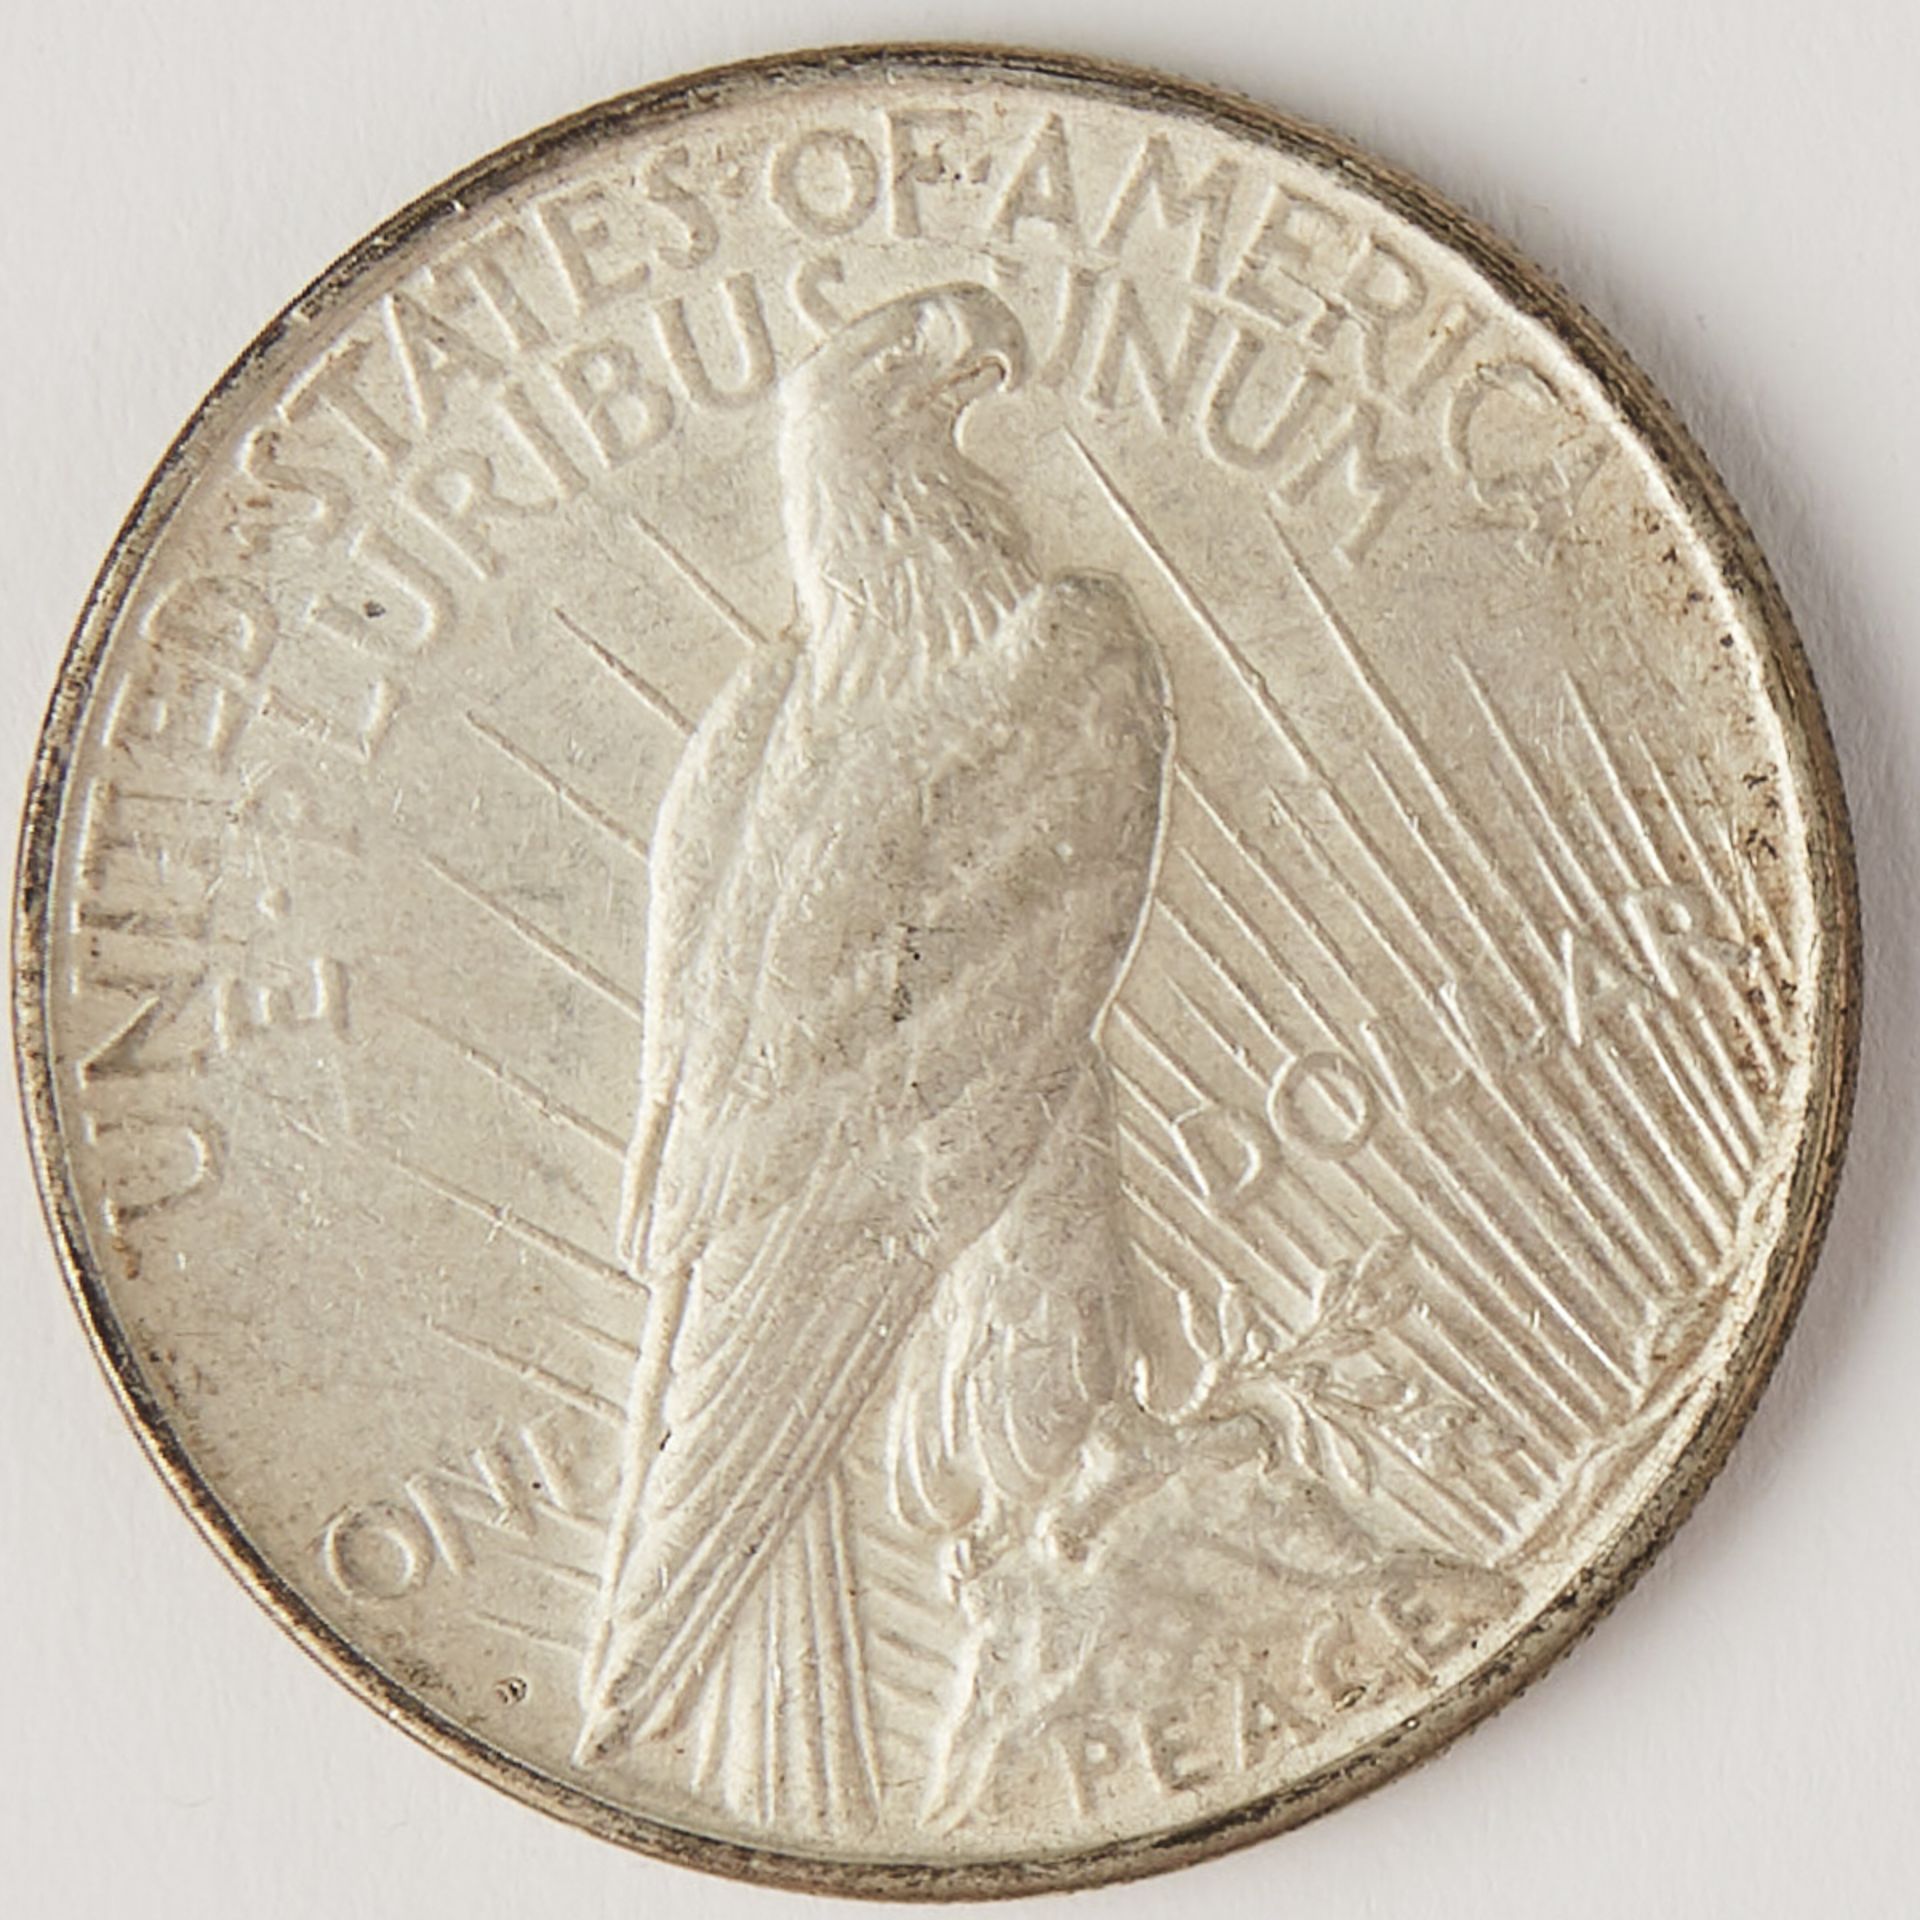 Grp: 40 Silver Dollar Morgan Coins - Image 4 of 4